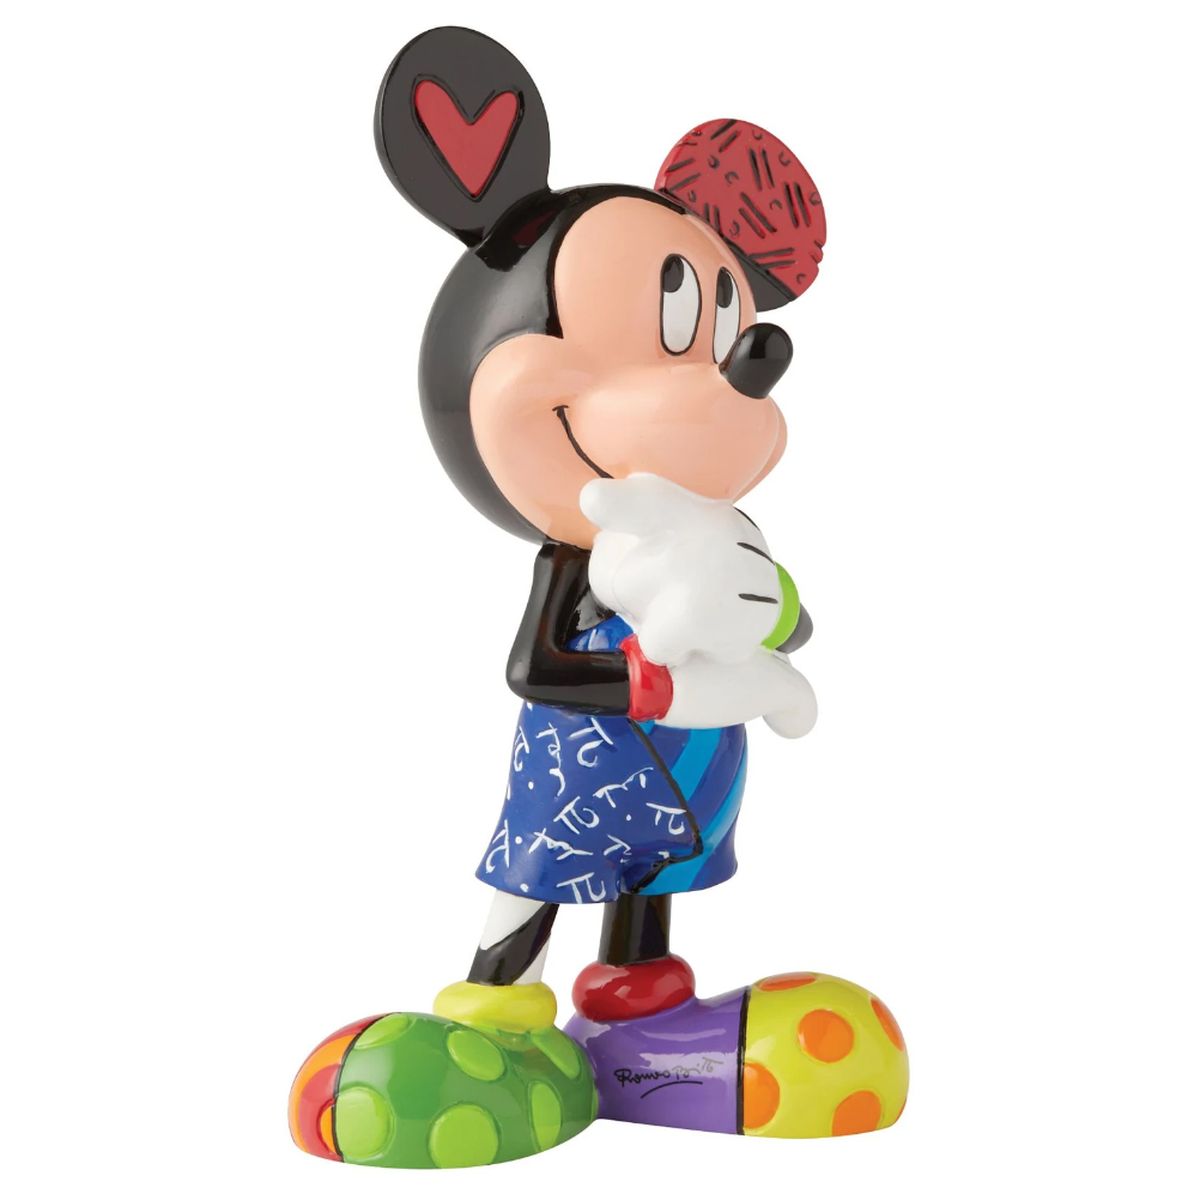 Figurine Mickey Mouse penseur - Disney by Britto